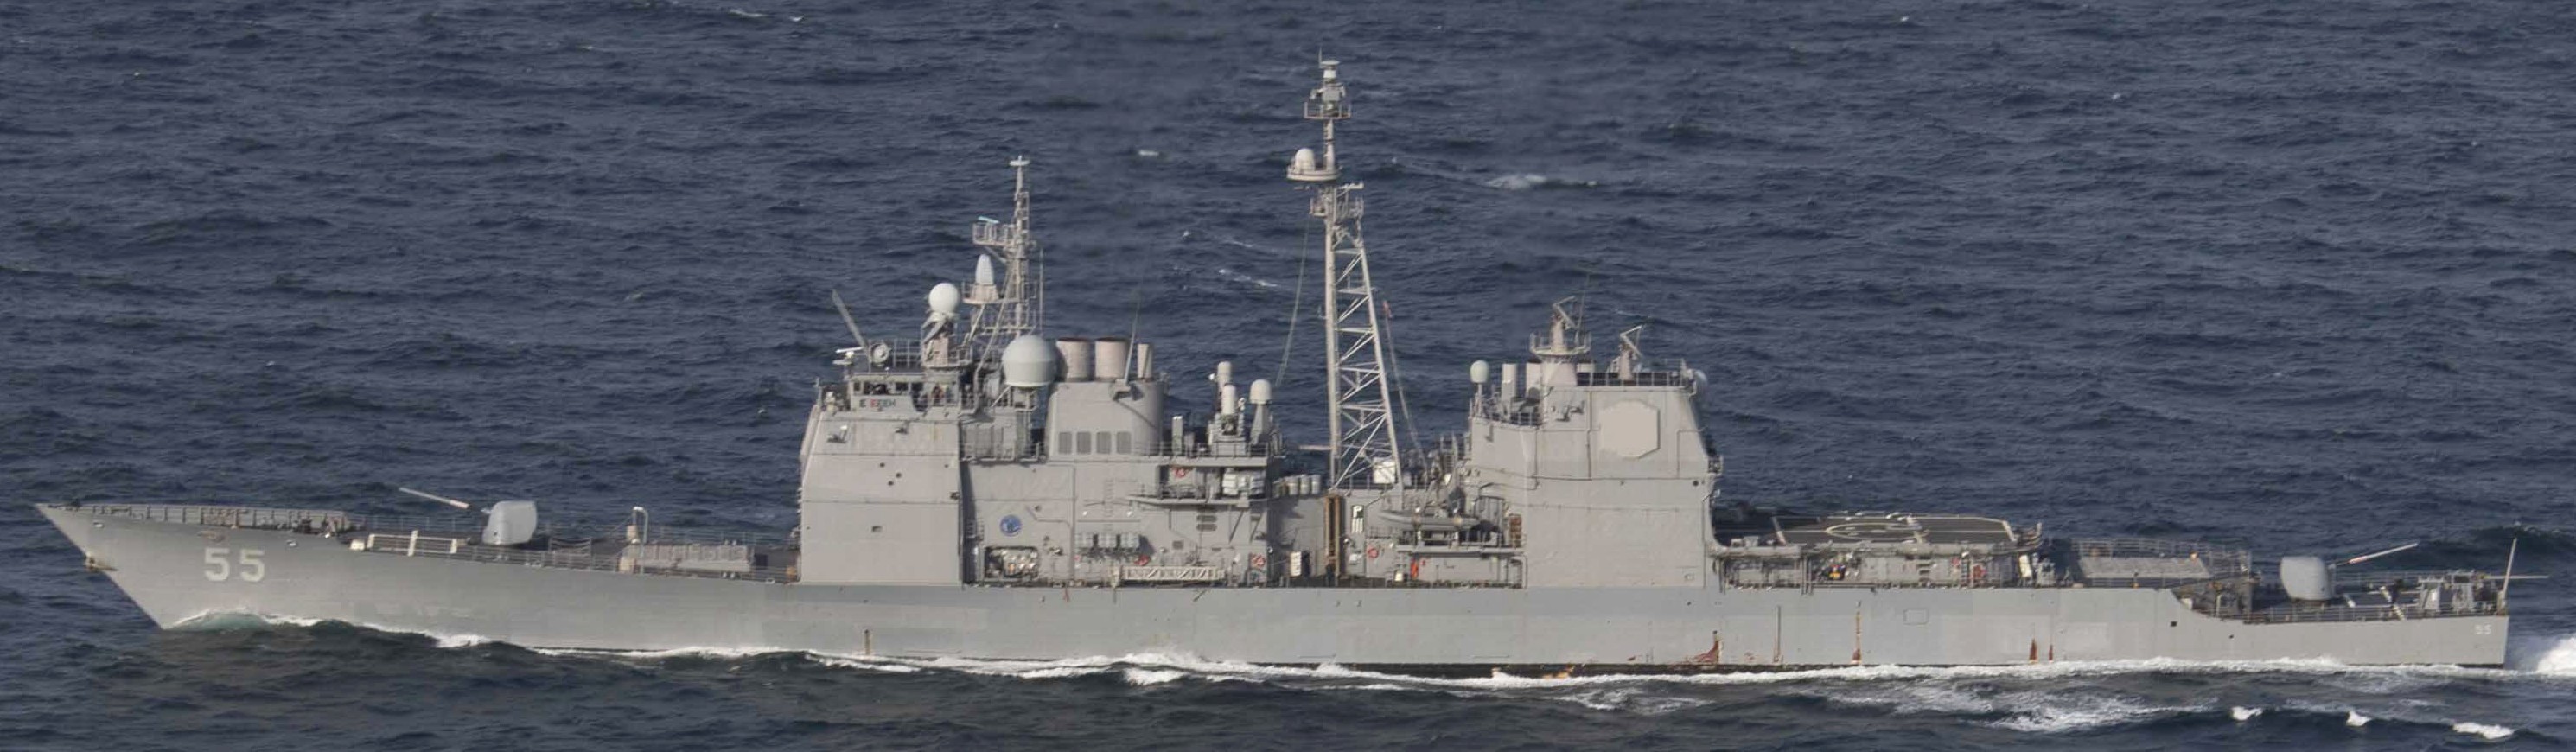 cg-55 uss leyte gulf ticonderoga class guided missile cruiser aegis us navy atlantic ocean 64